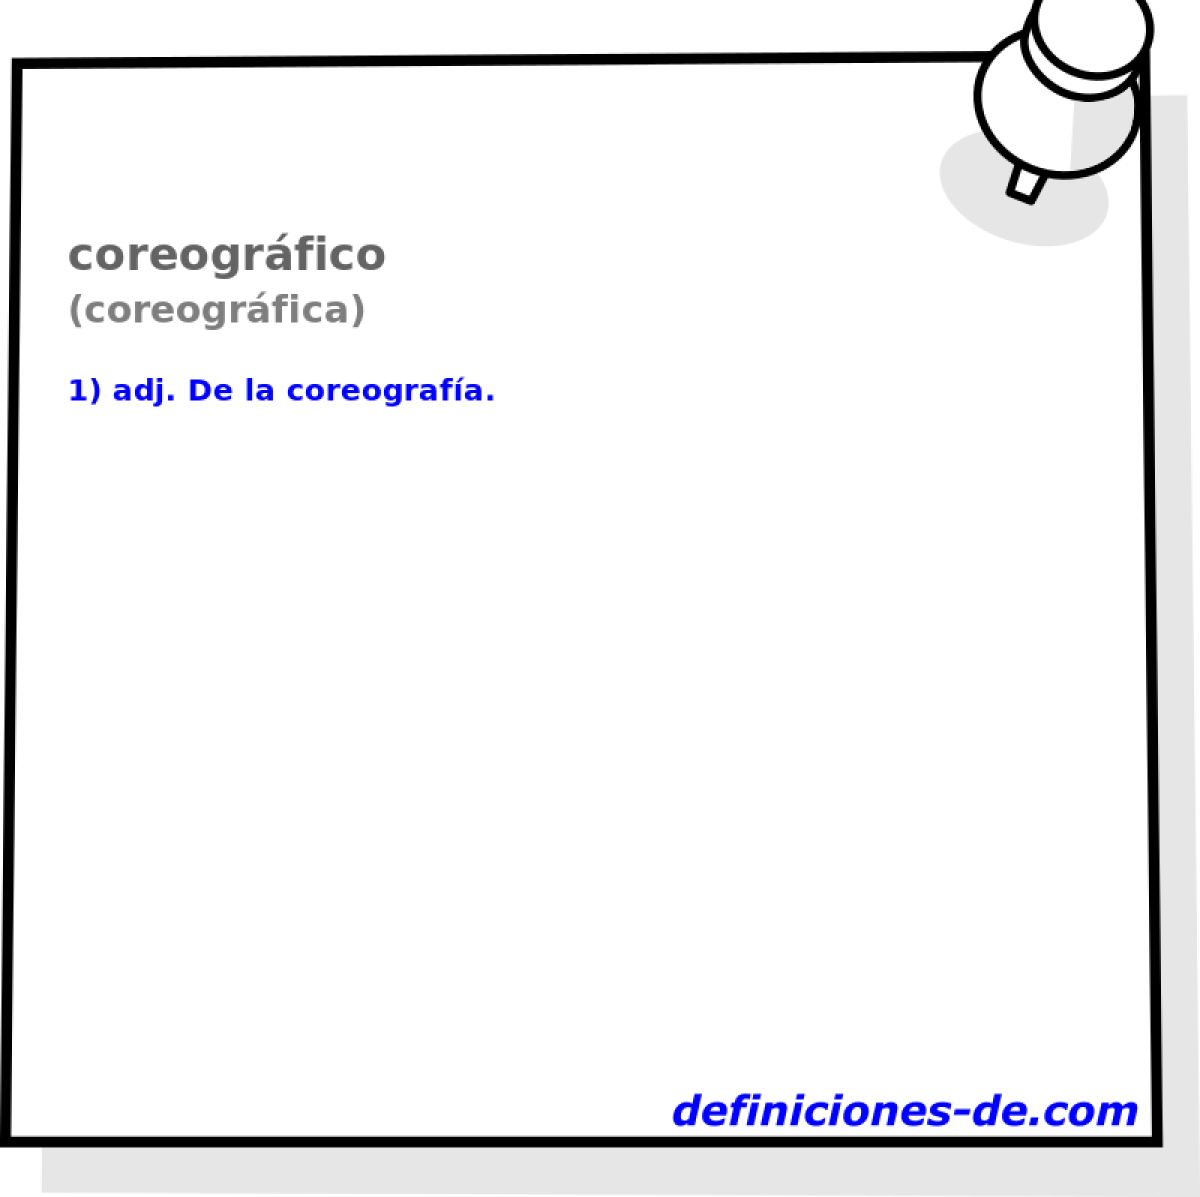 coreogrfico (coreogrfica)